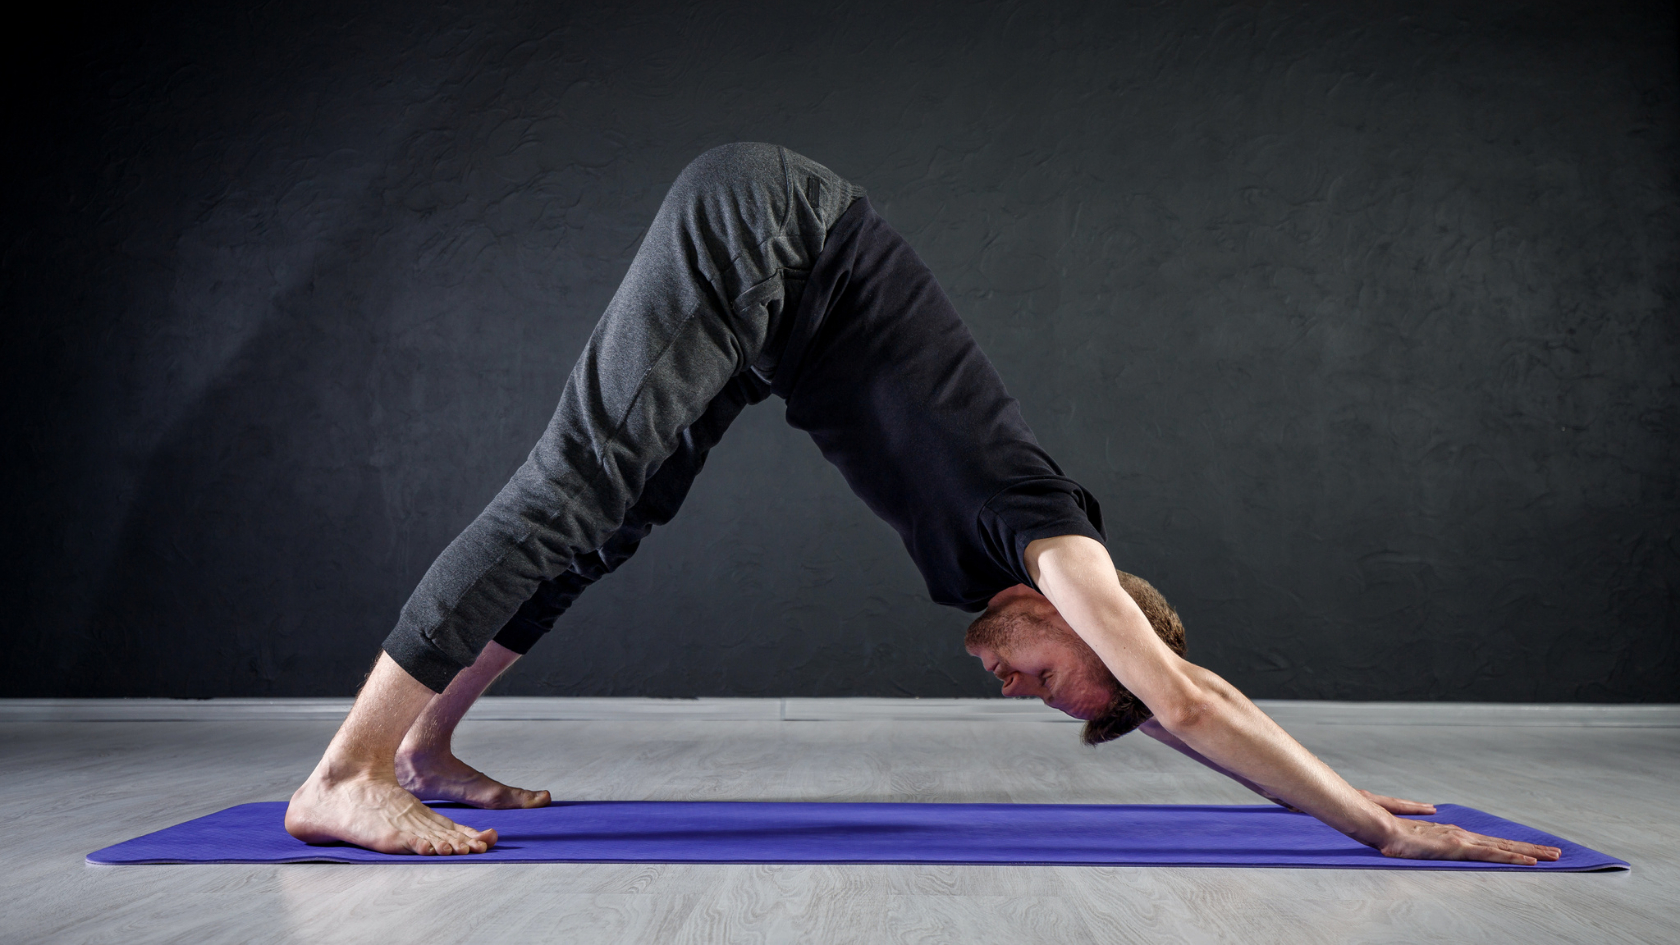 A man doing a yoga pose on a blue mat.